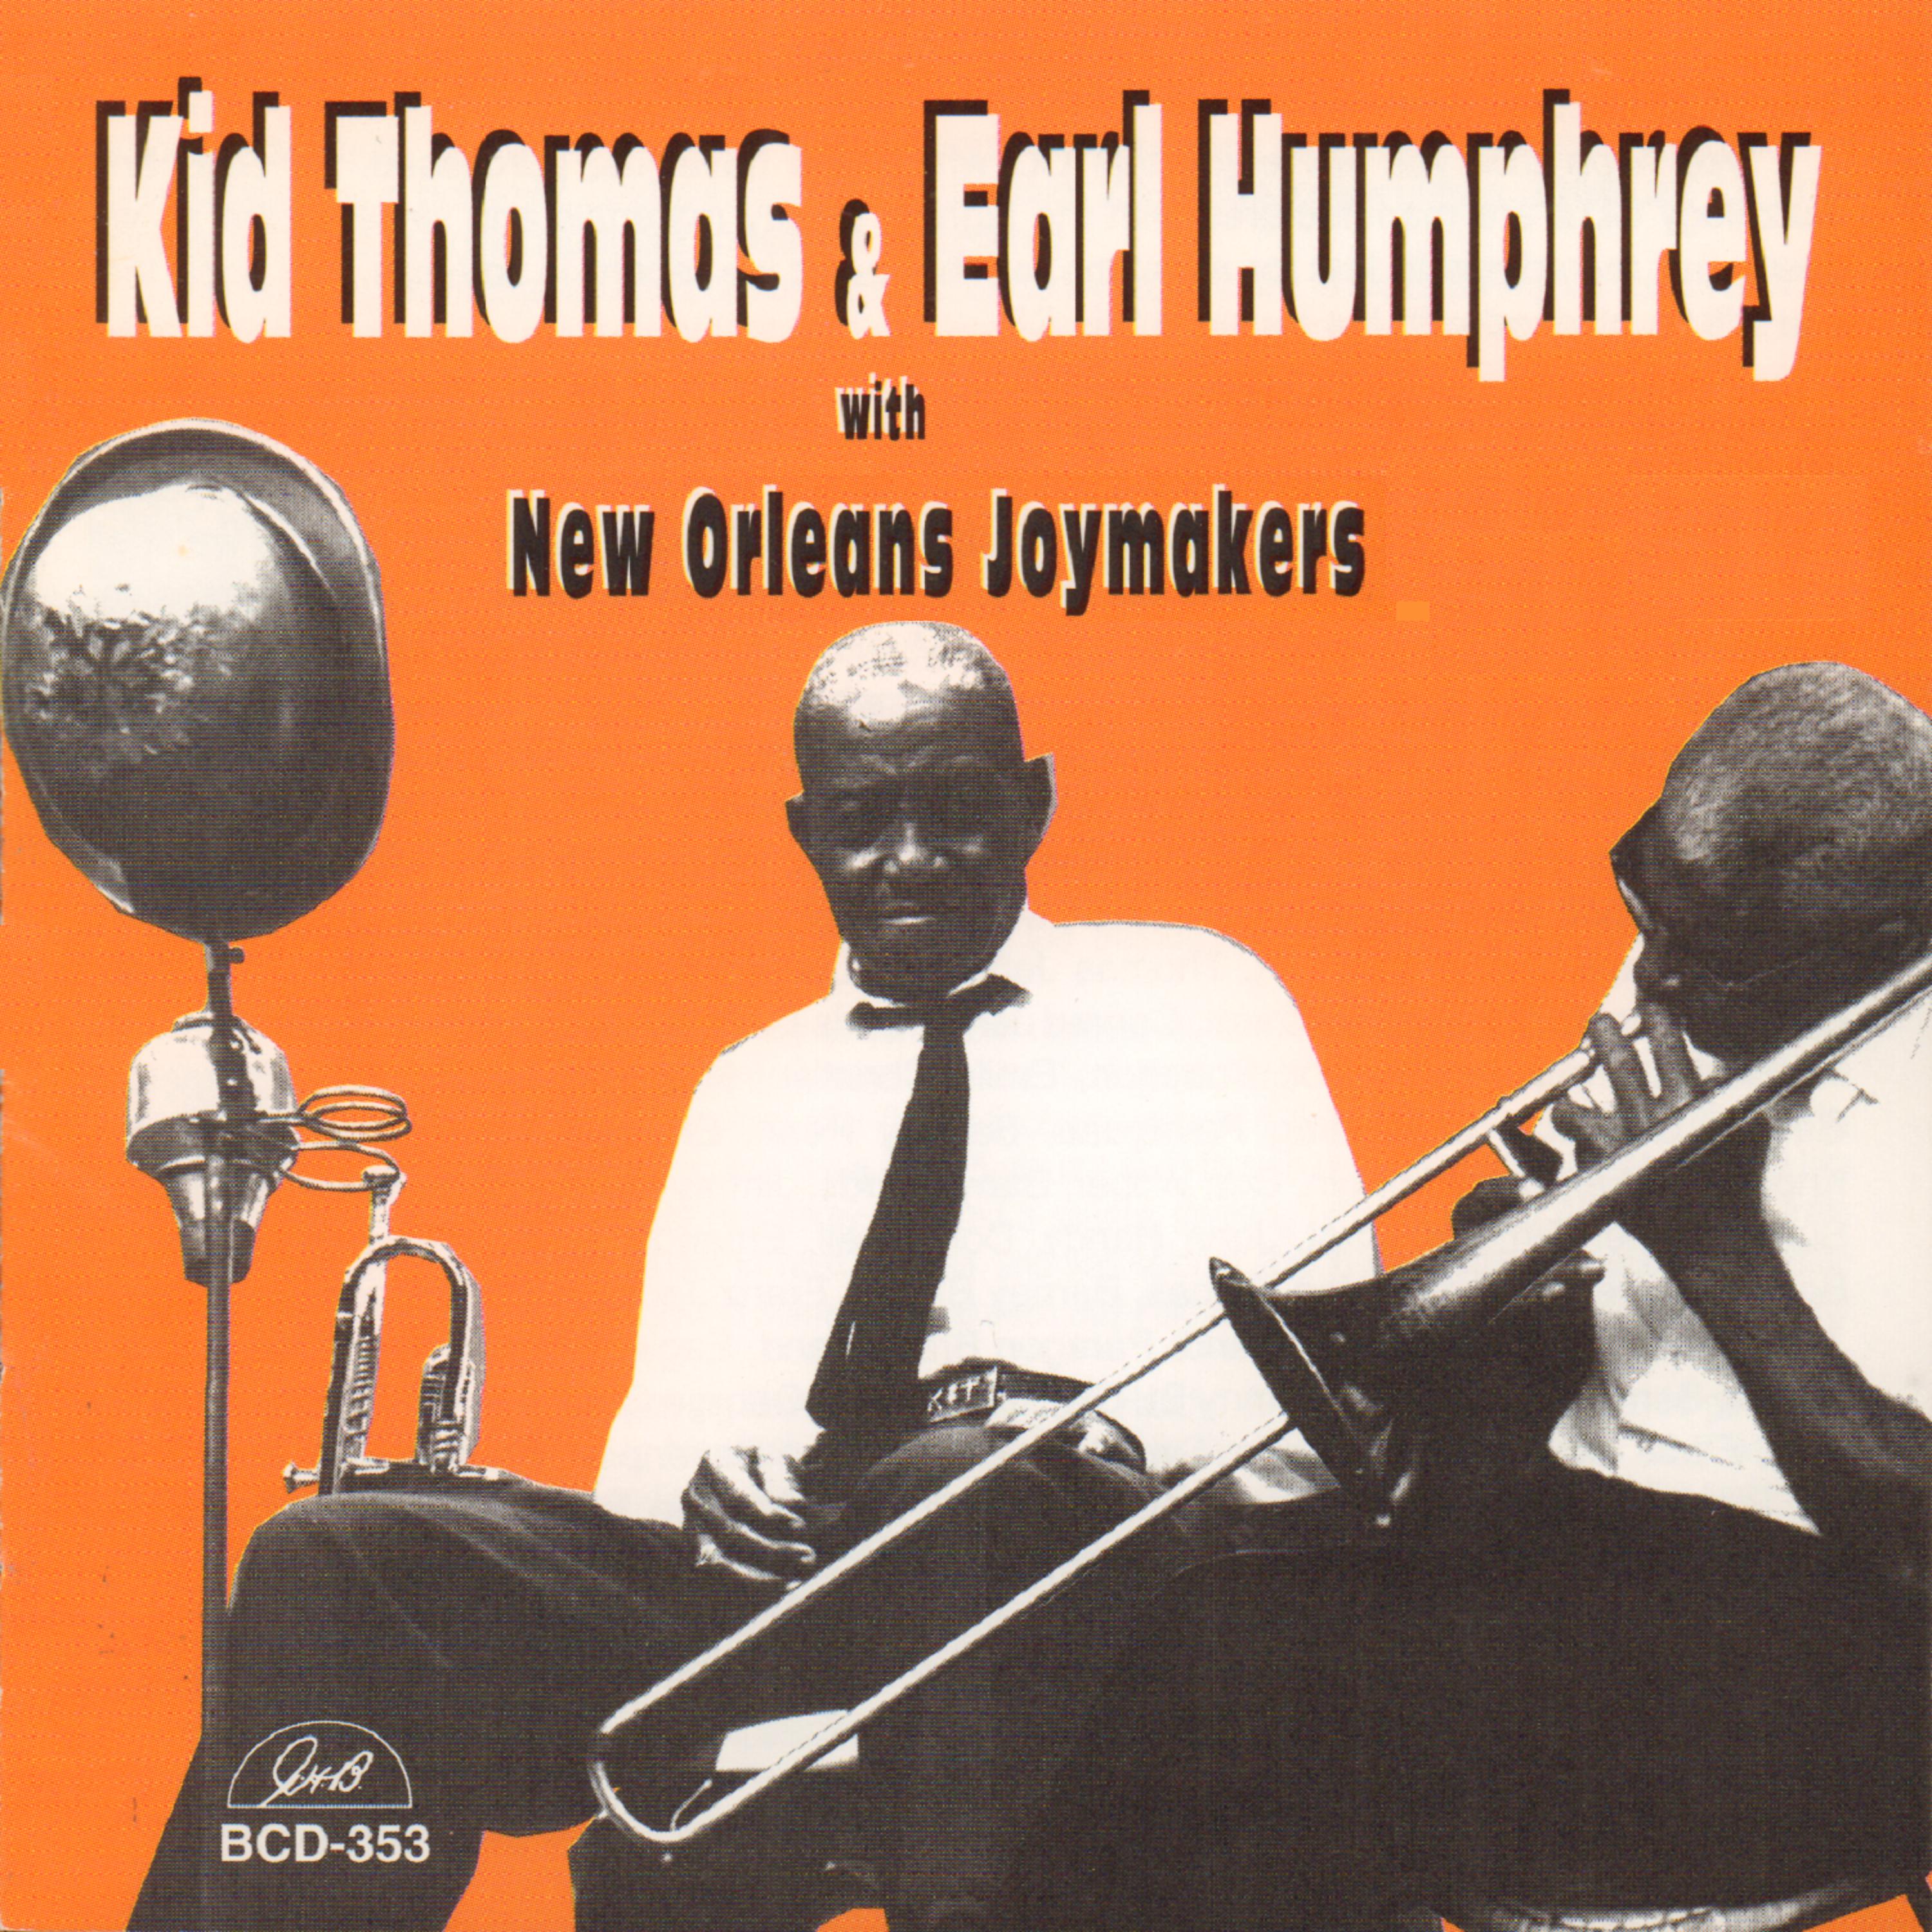 Постер альбома "Kid" Thomas Valentine and Earl Humphrey with New Orleans Joymakers